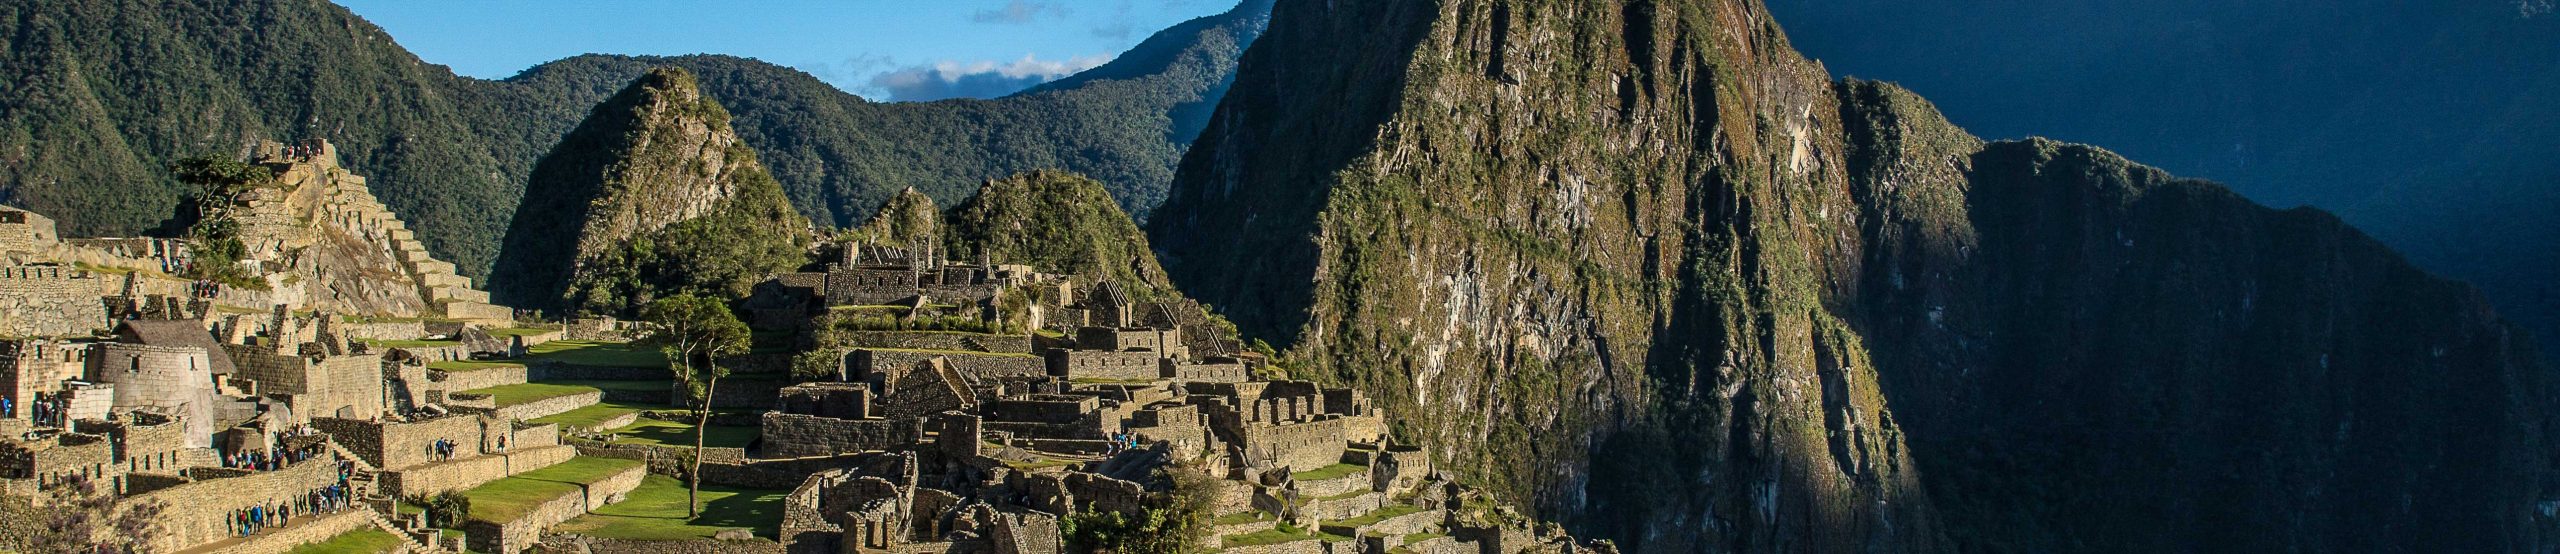 Peru | Naples Global Advisors, SEC Registered Investment Advisor